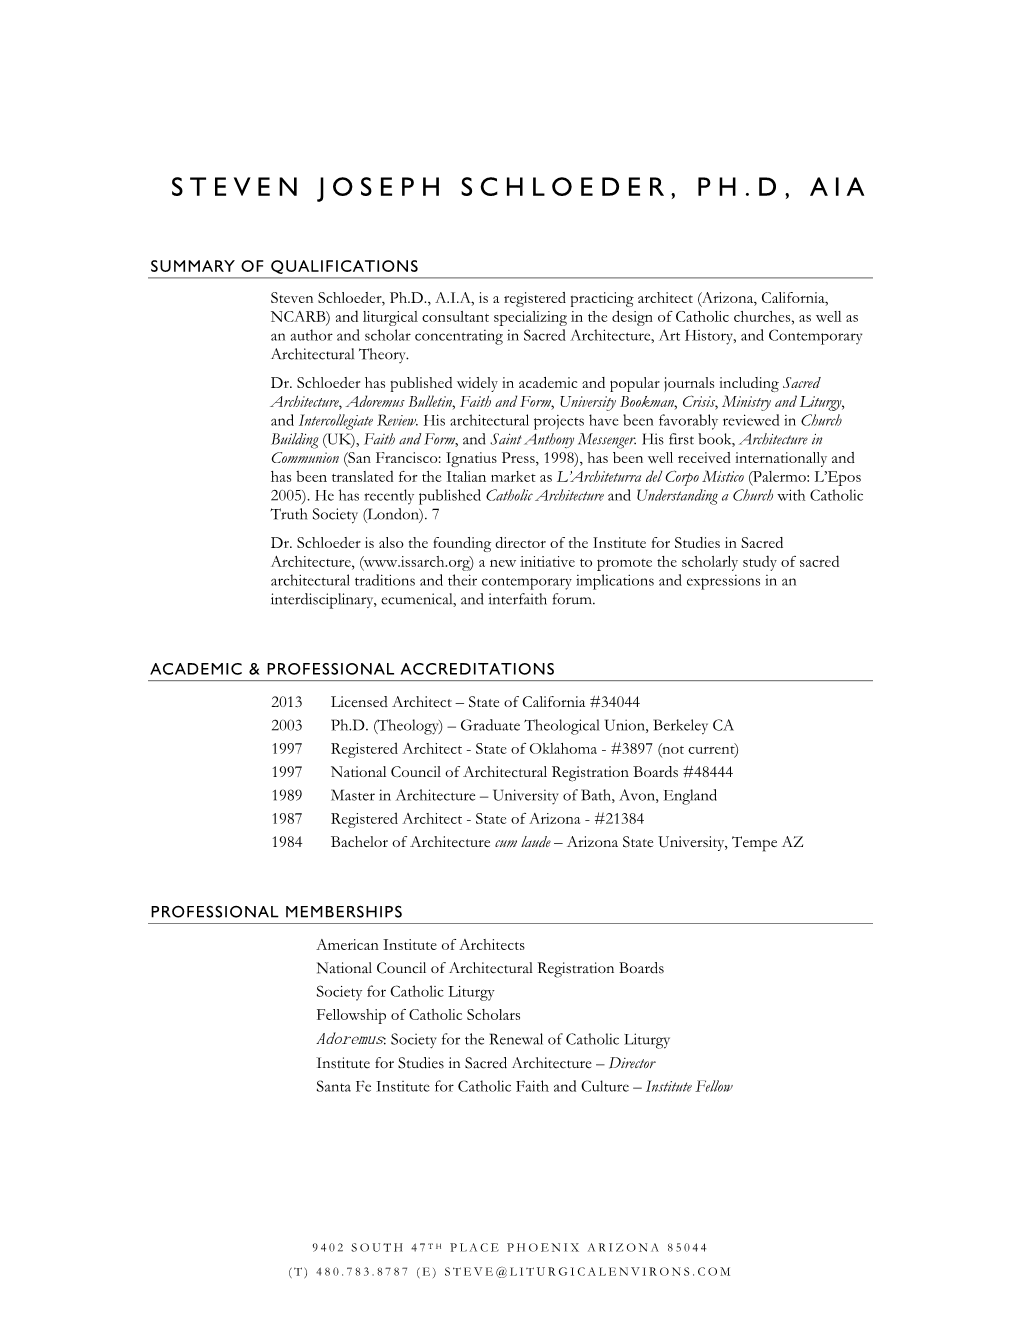 Steven Joseph Schloeder, Ph.D, Aia